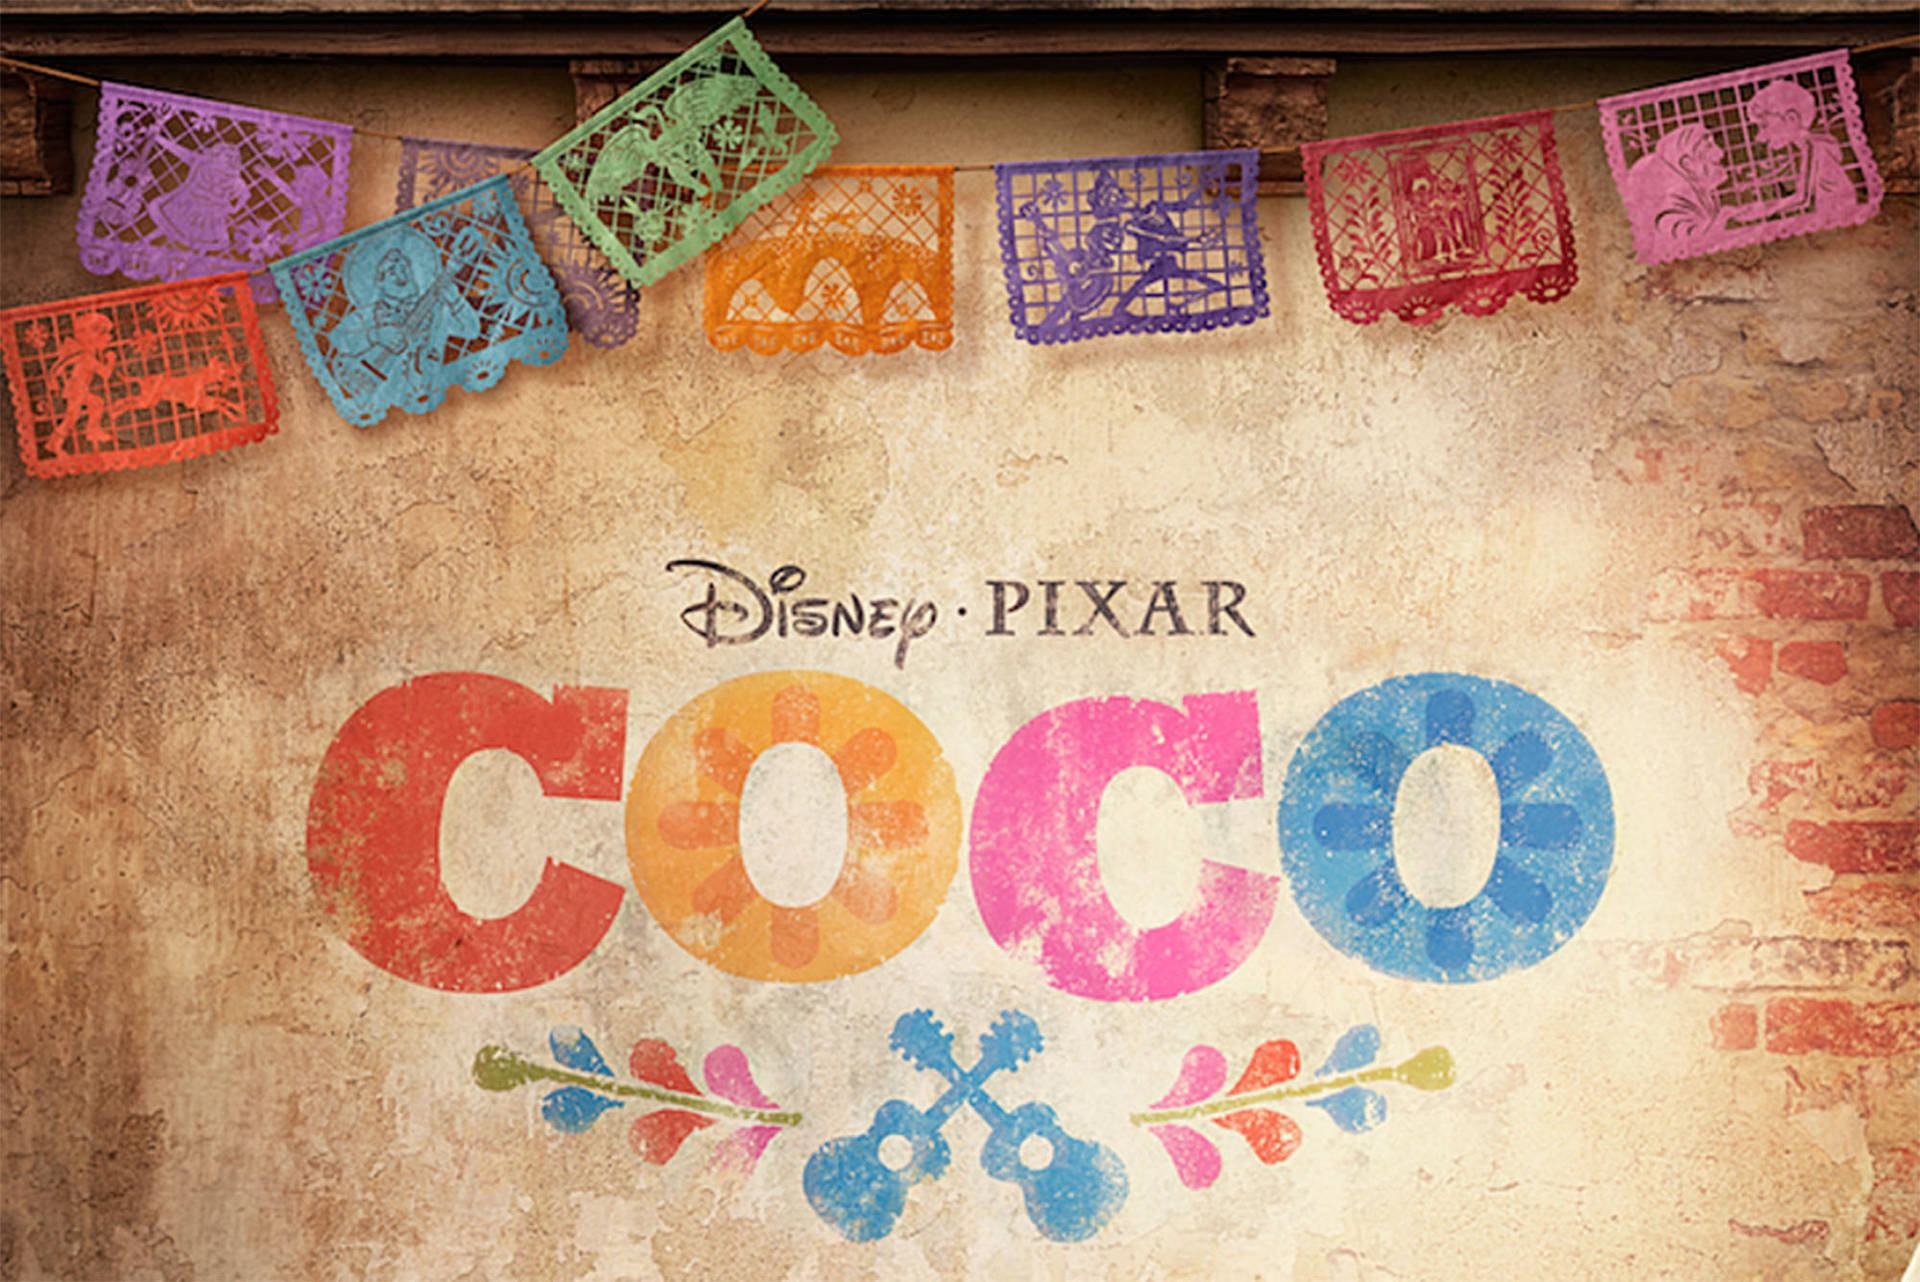 Artistic Digital Art Of Coco Title